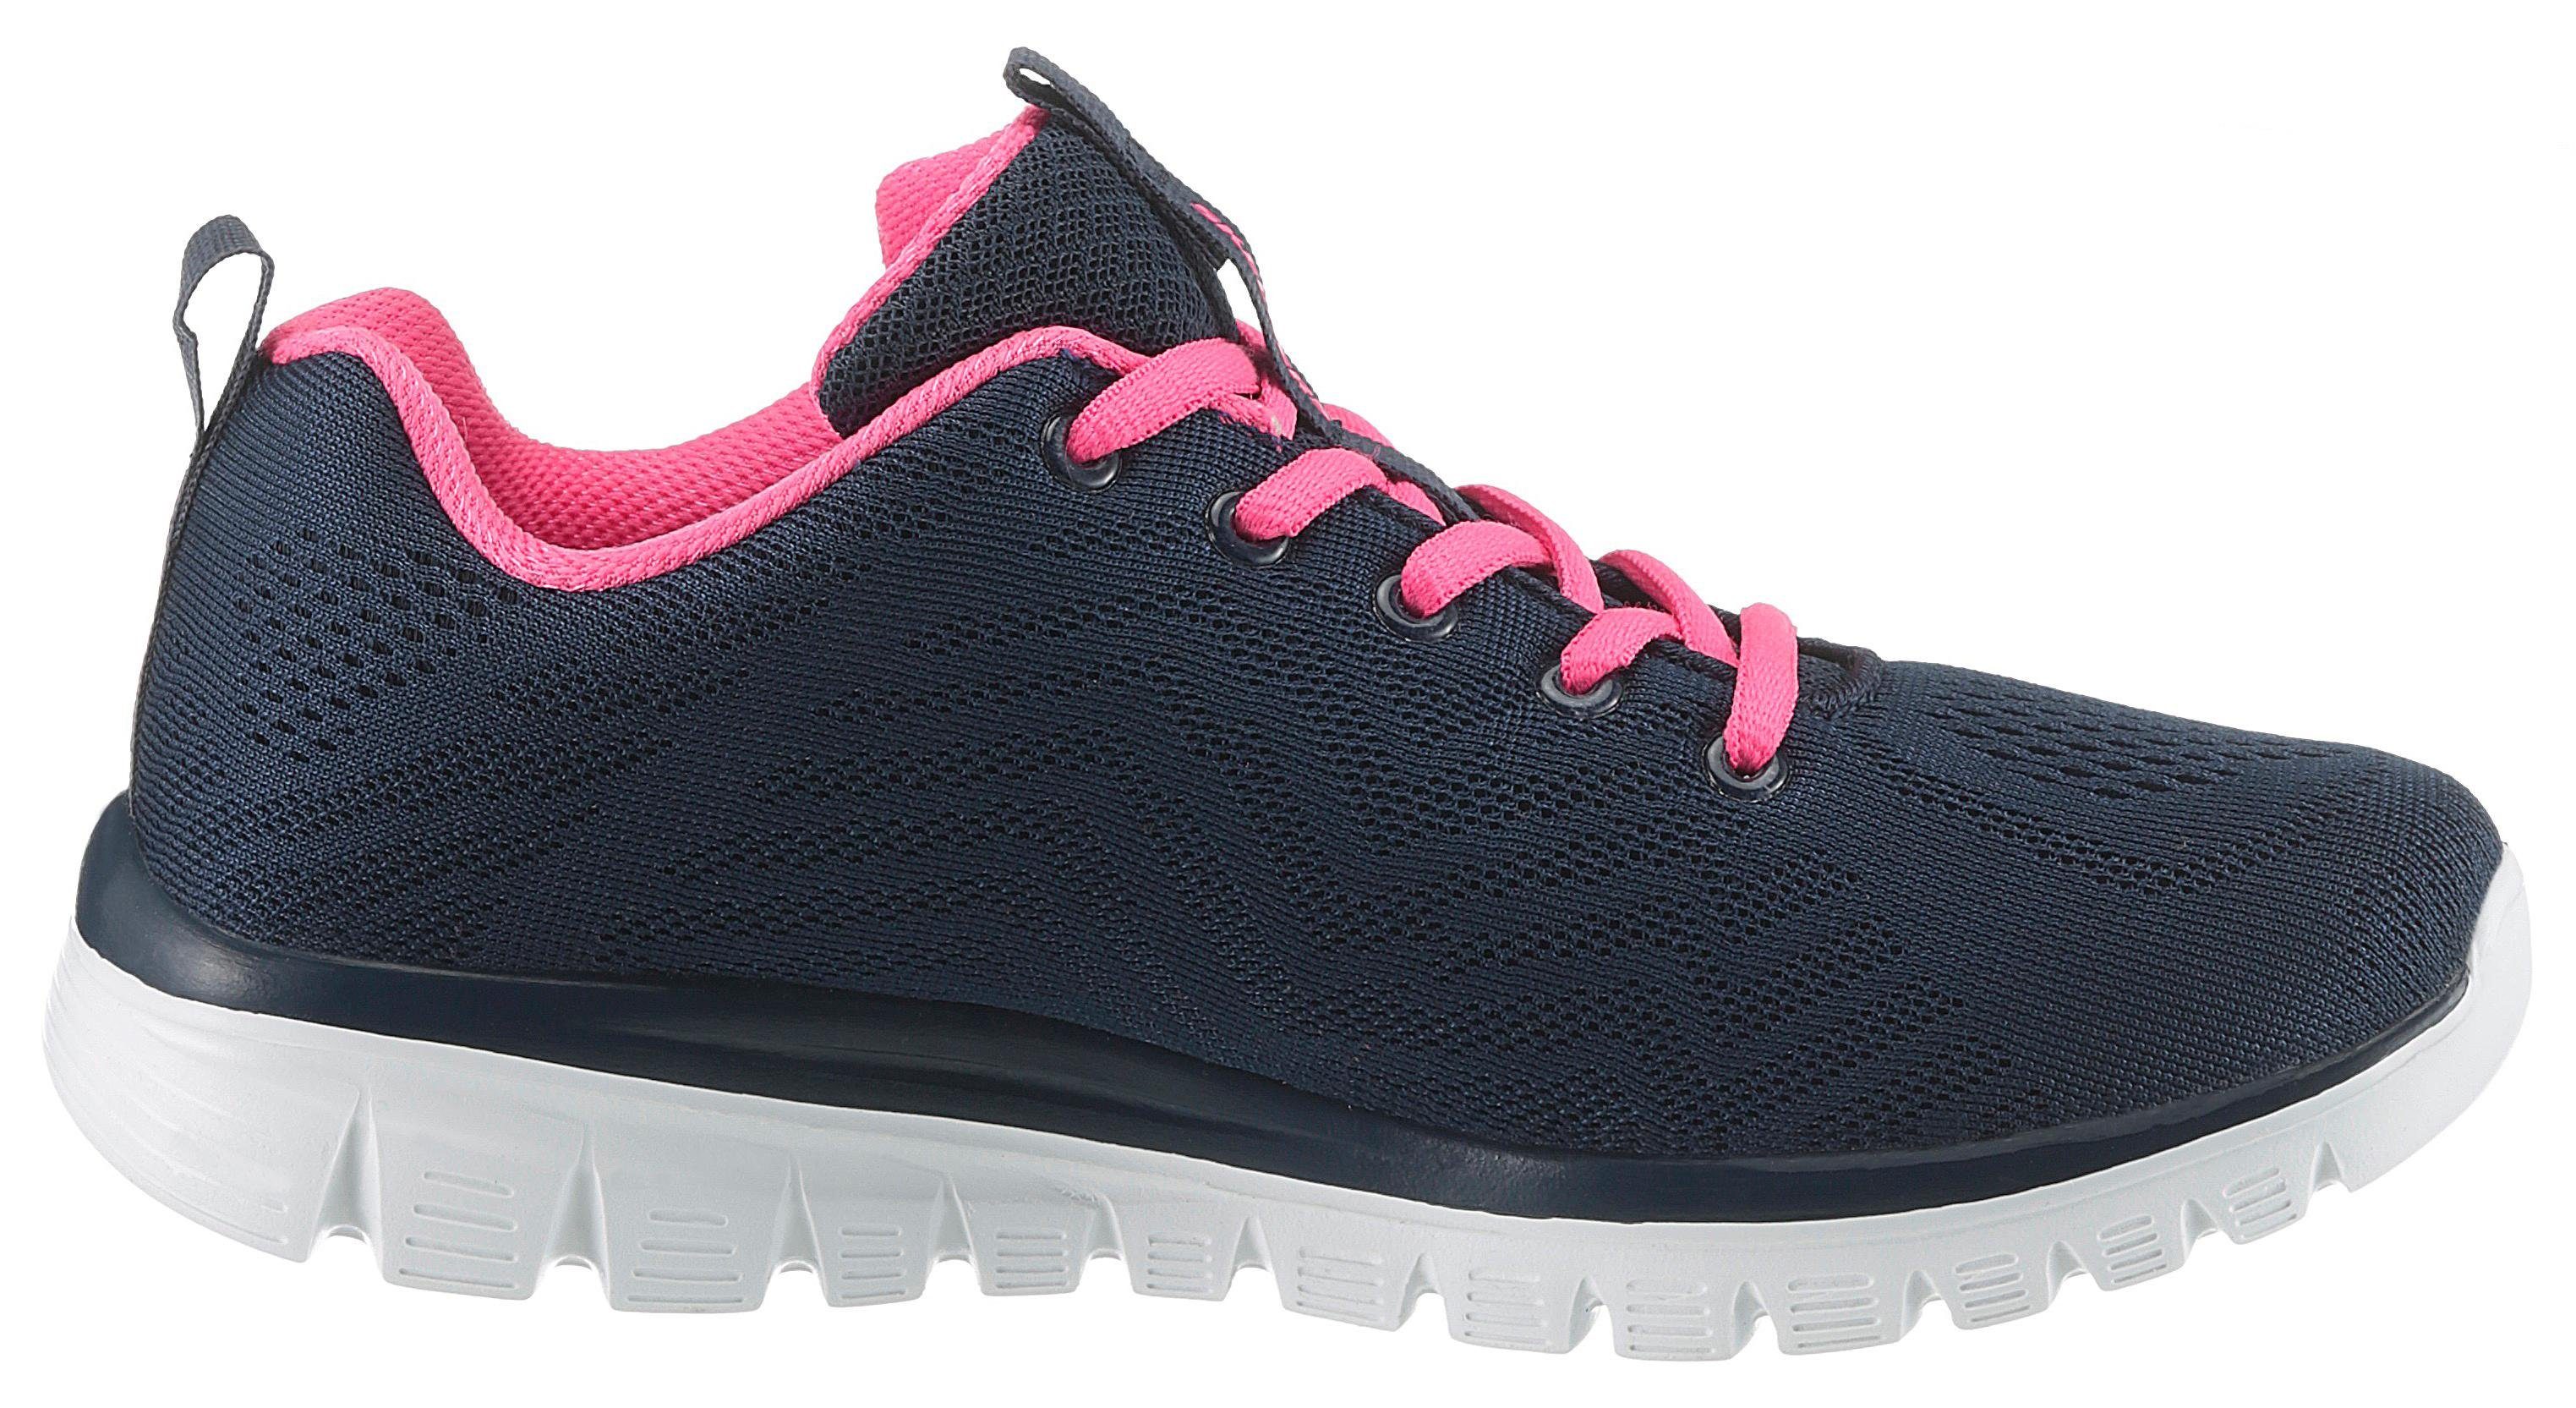 Sneaker Get navy-pink Connected Skechers Dämpfung durch Foam Graceful Memory mit -